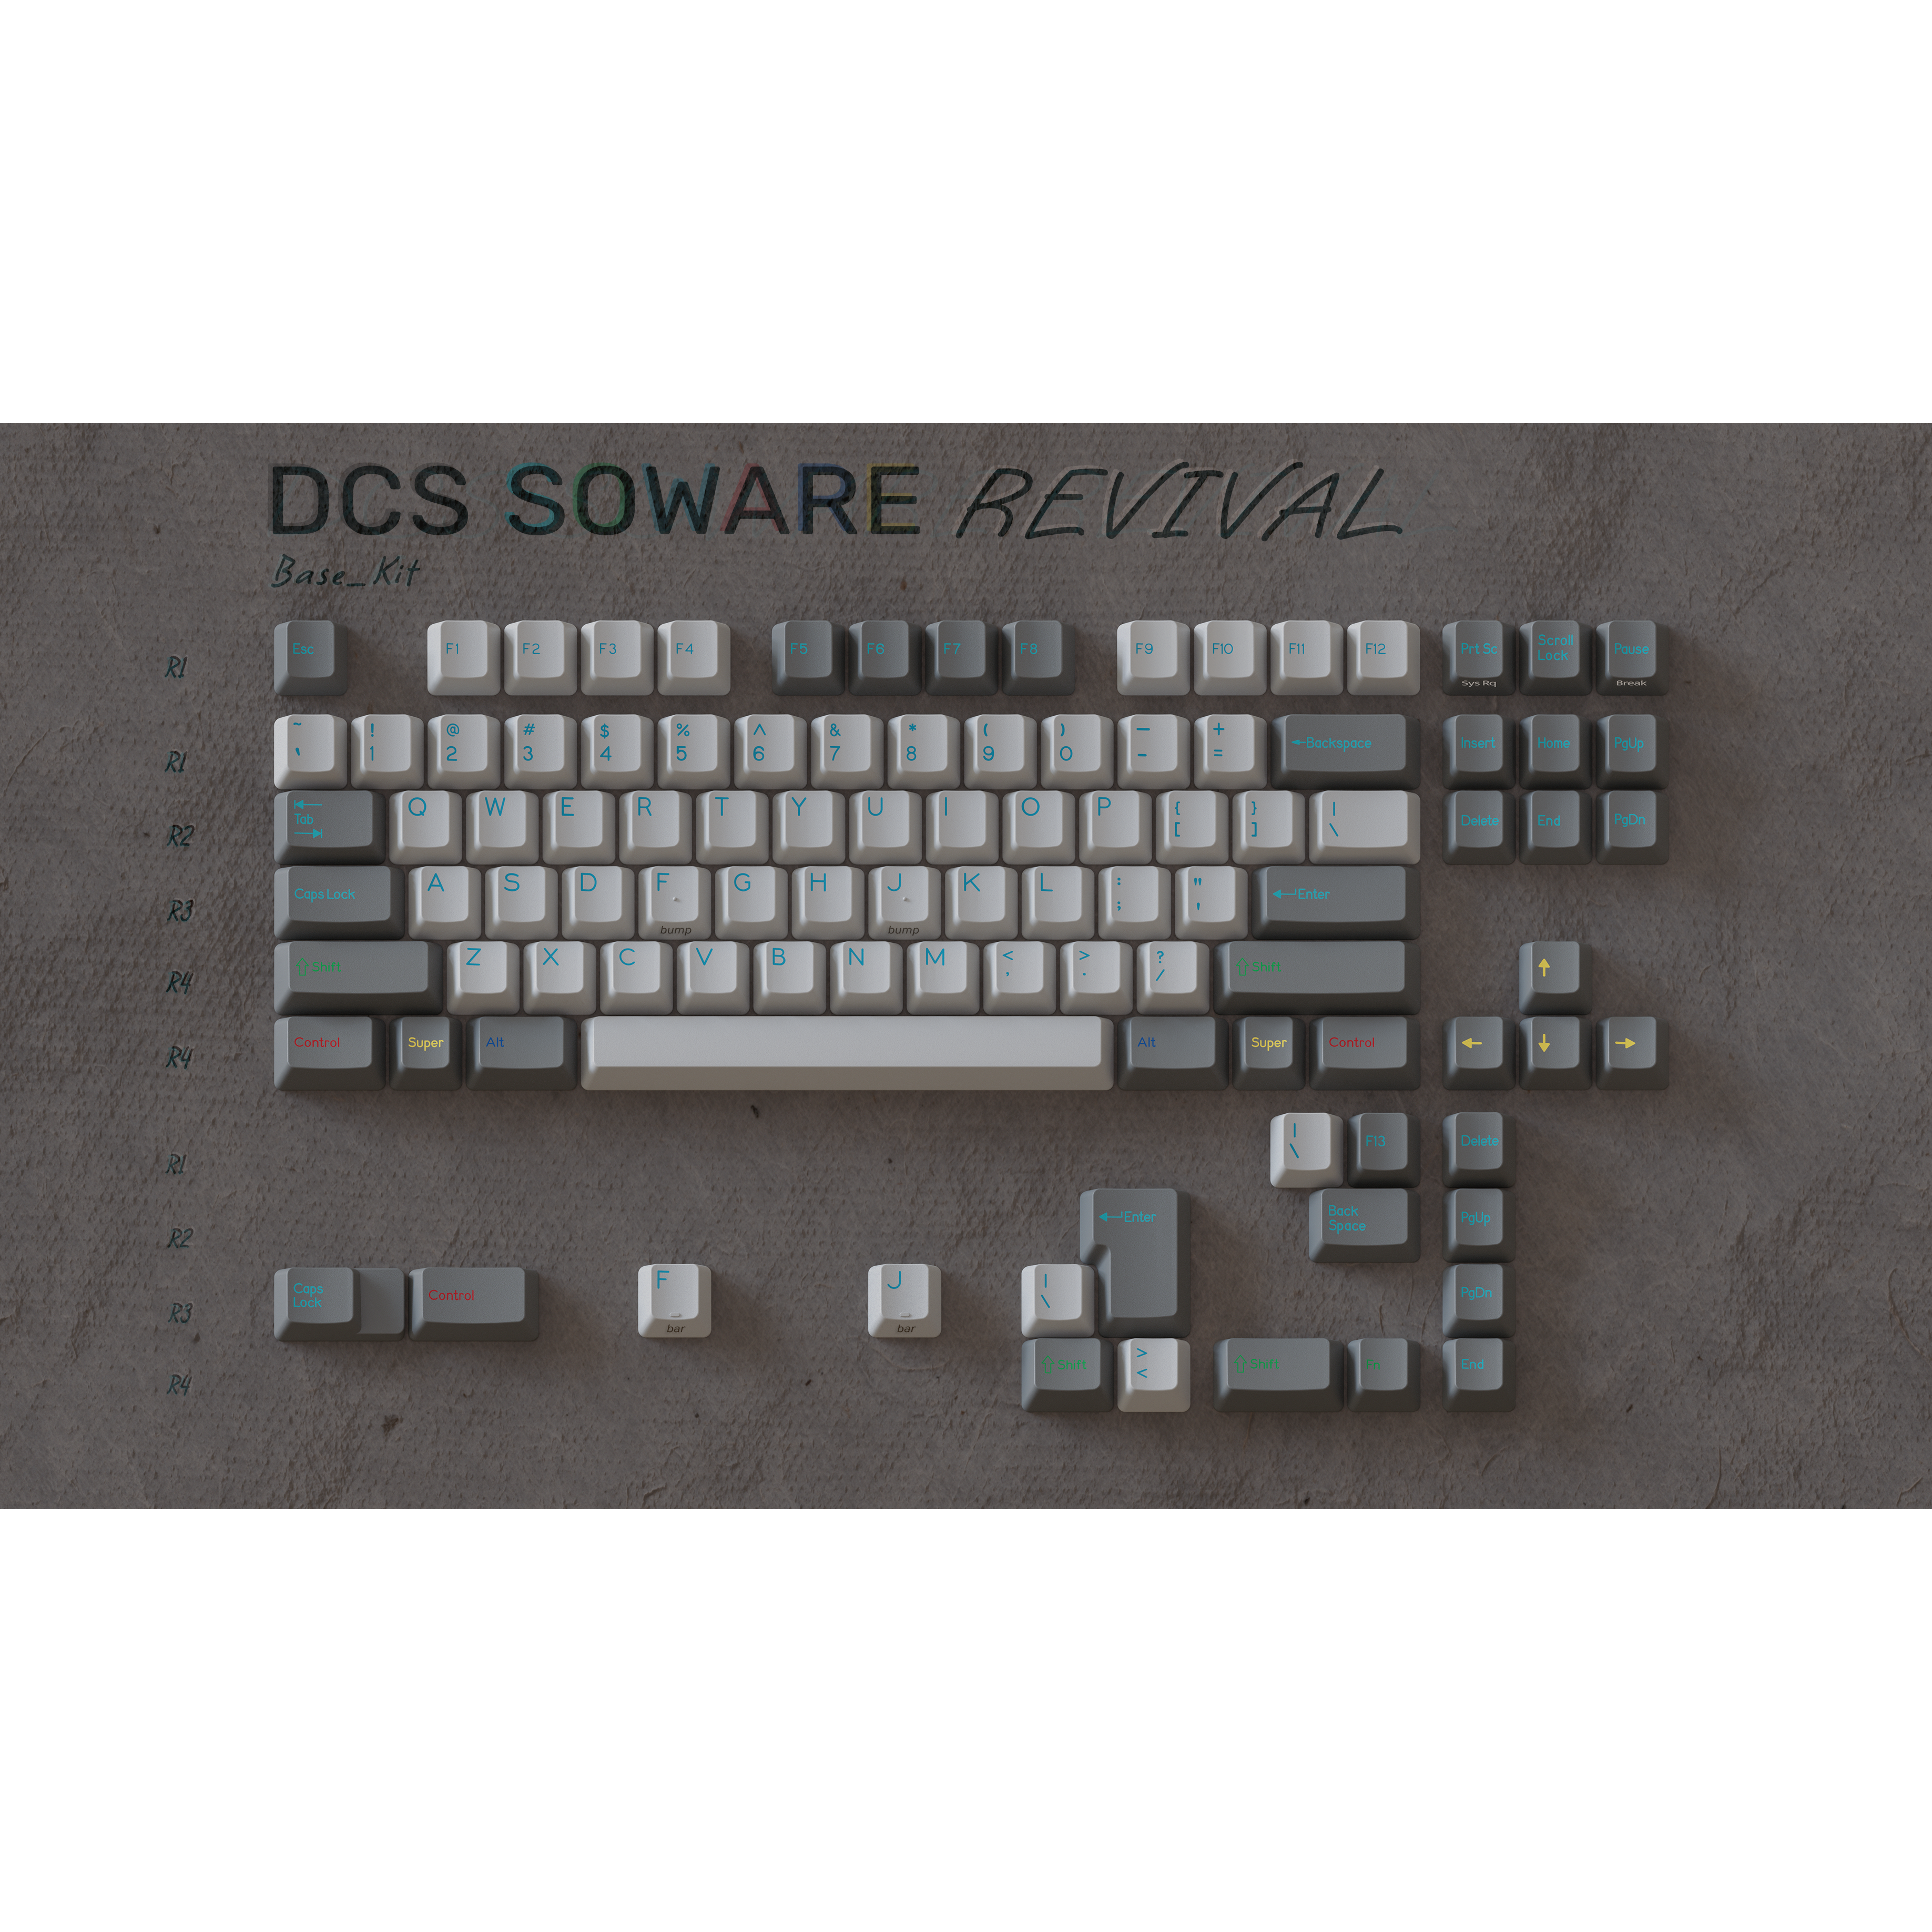 DCS Soware Revival